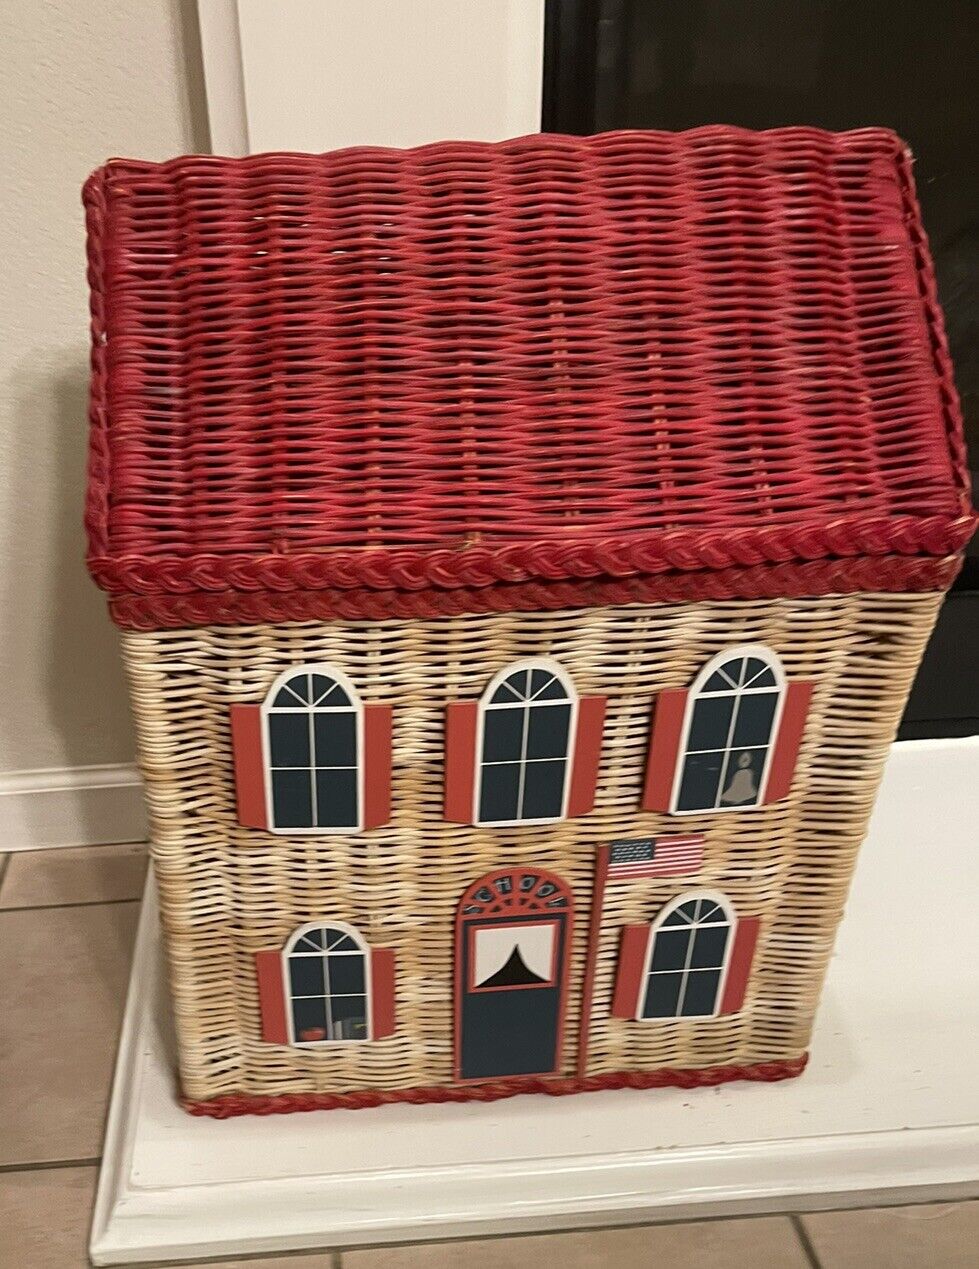 Vintage Wicker Rattan Toy Storage Box Basket Laundry Hamper Ballet School House